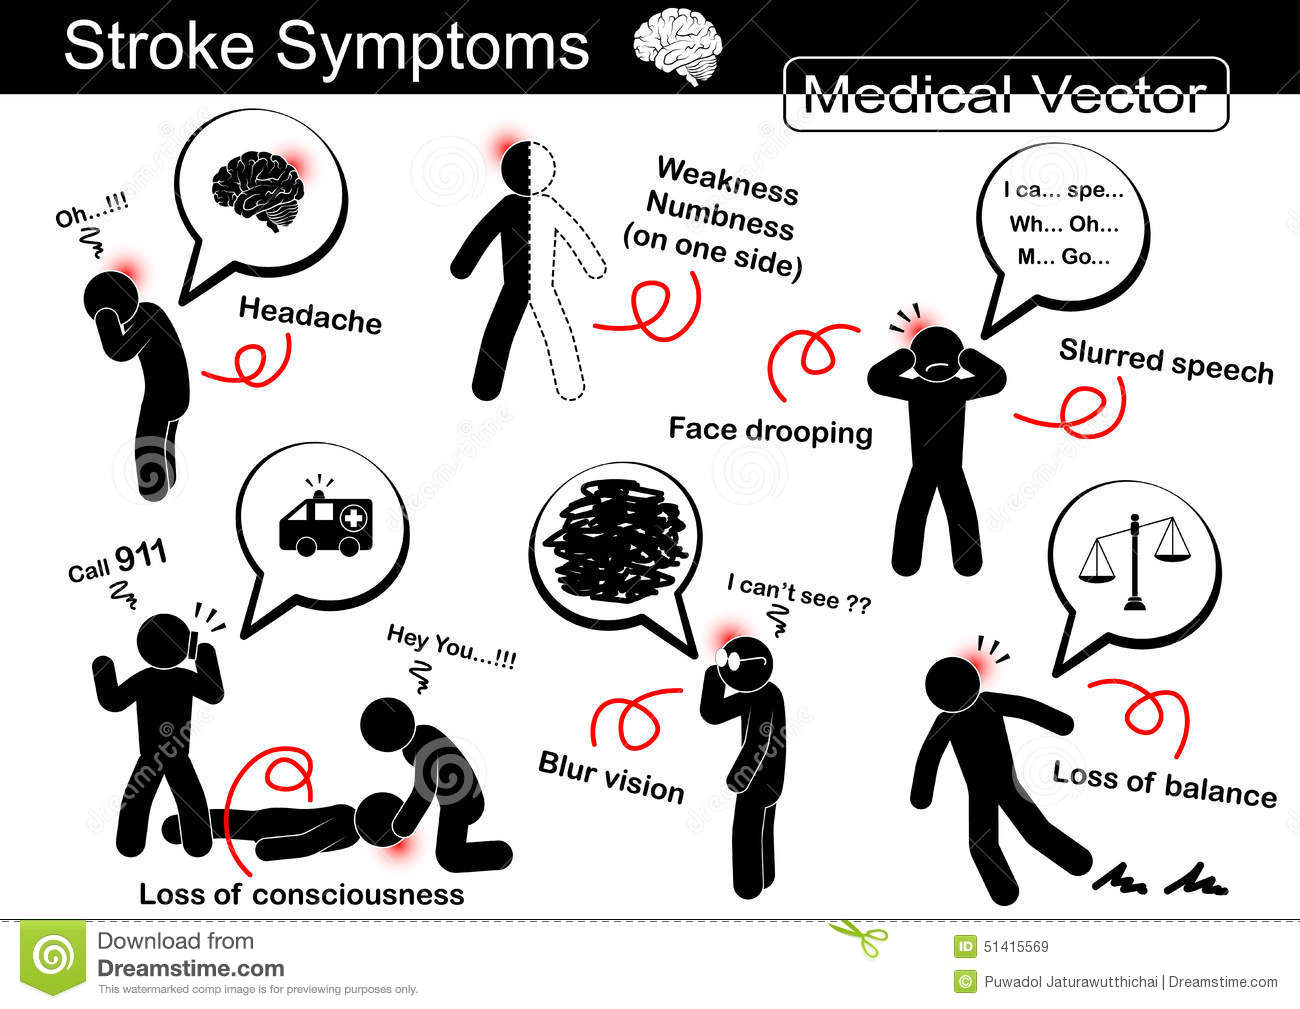 Stroke Symptoms Headache Weakness Numbness One Side Face Drooping